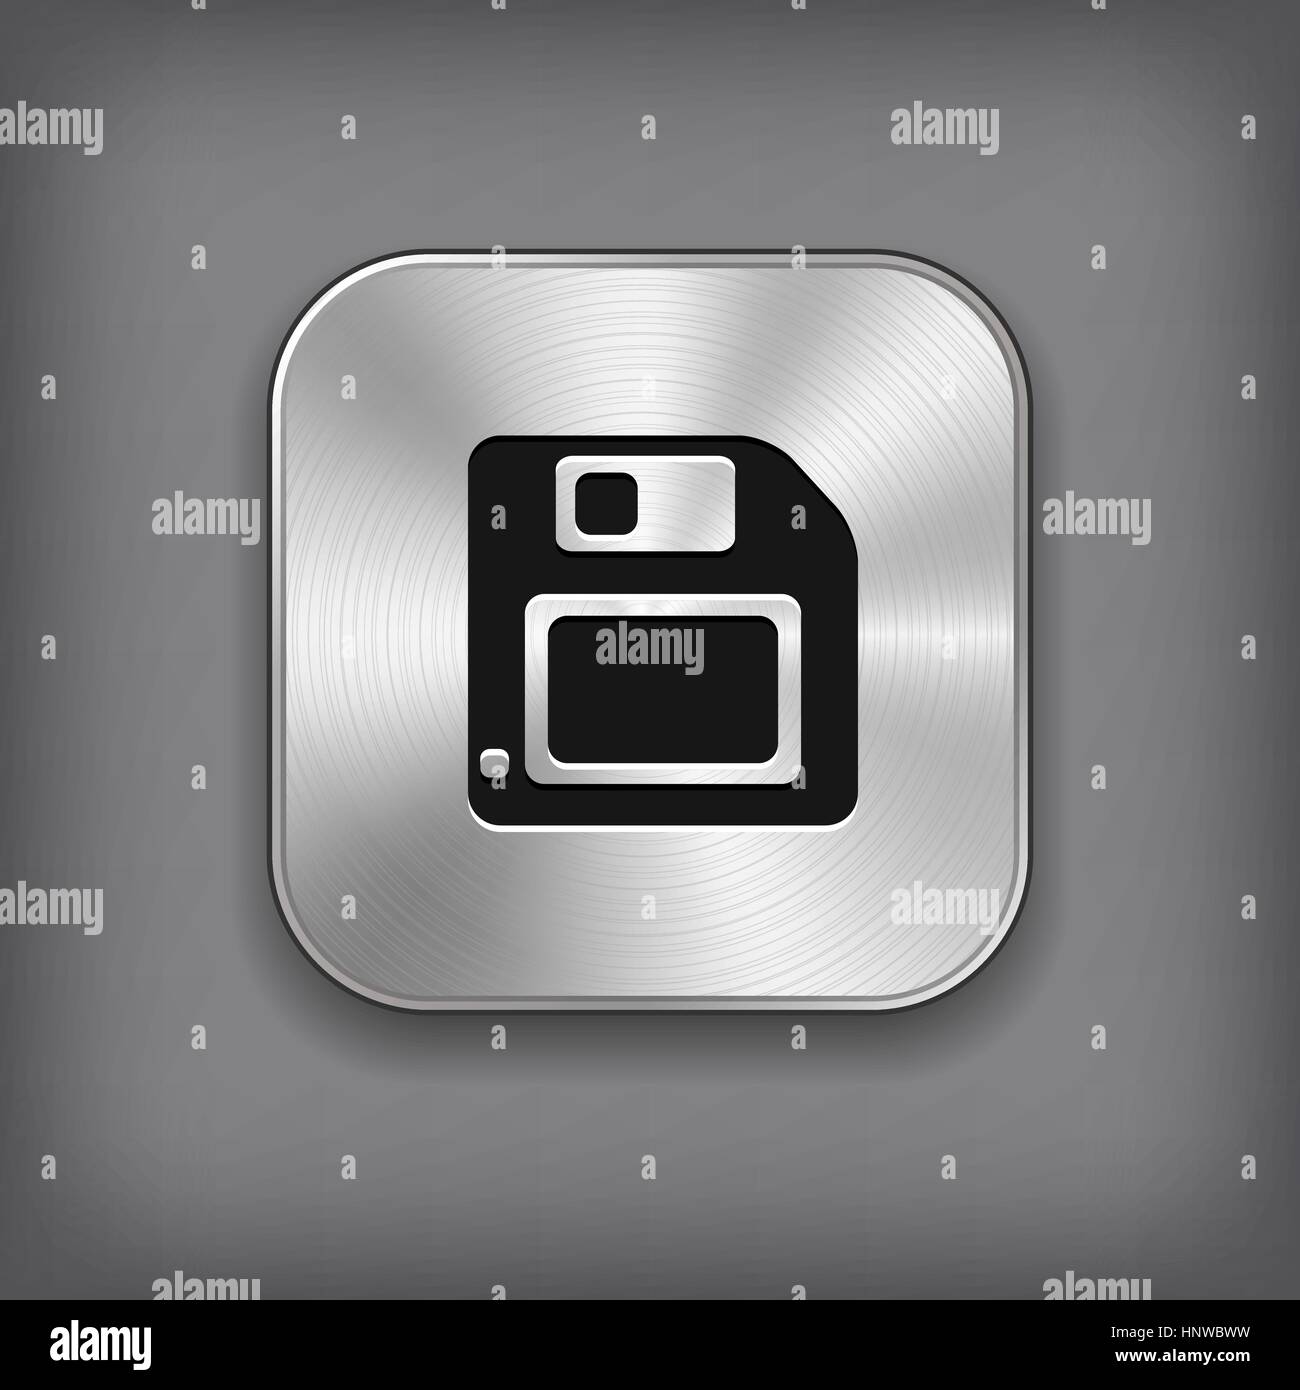 Floppy diskette icon - vector metal app button with shadow Stock Vector